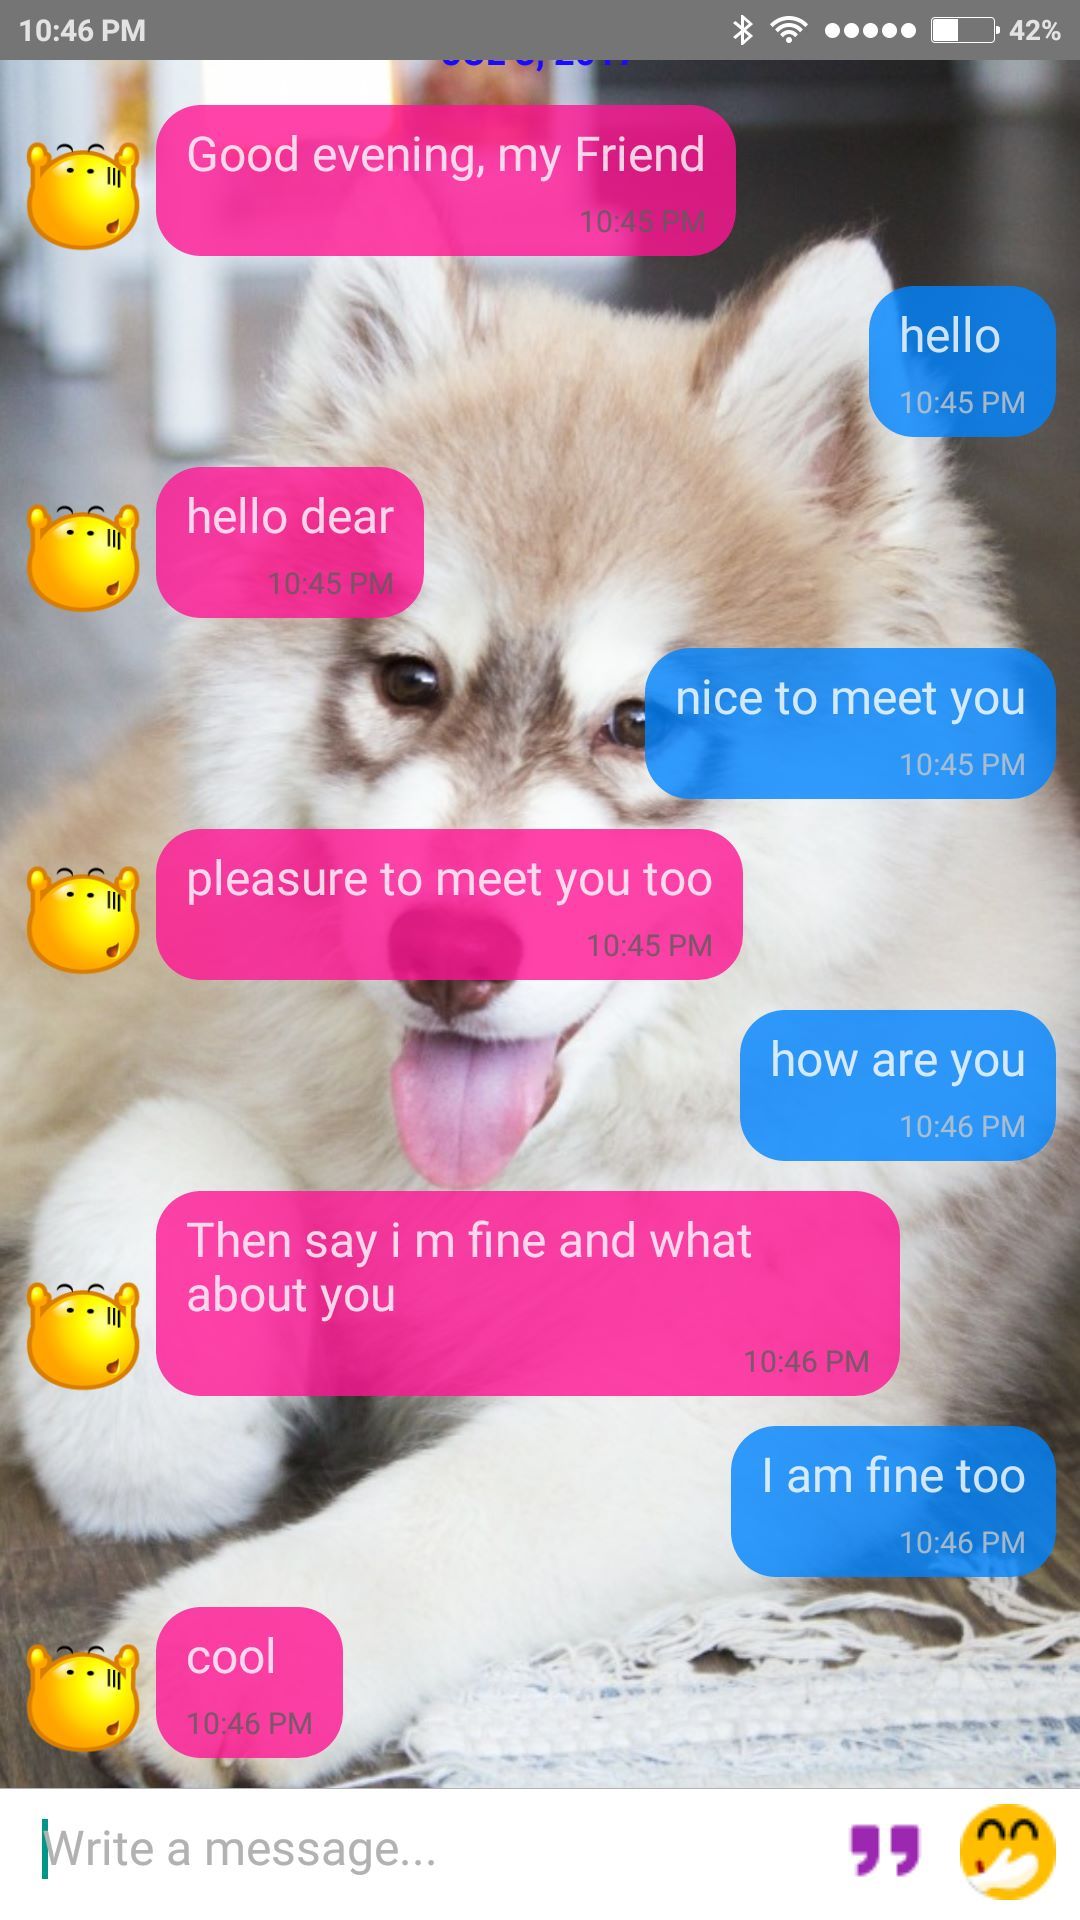 Buddy Messenger - English conversation chatbot